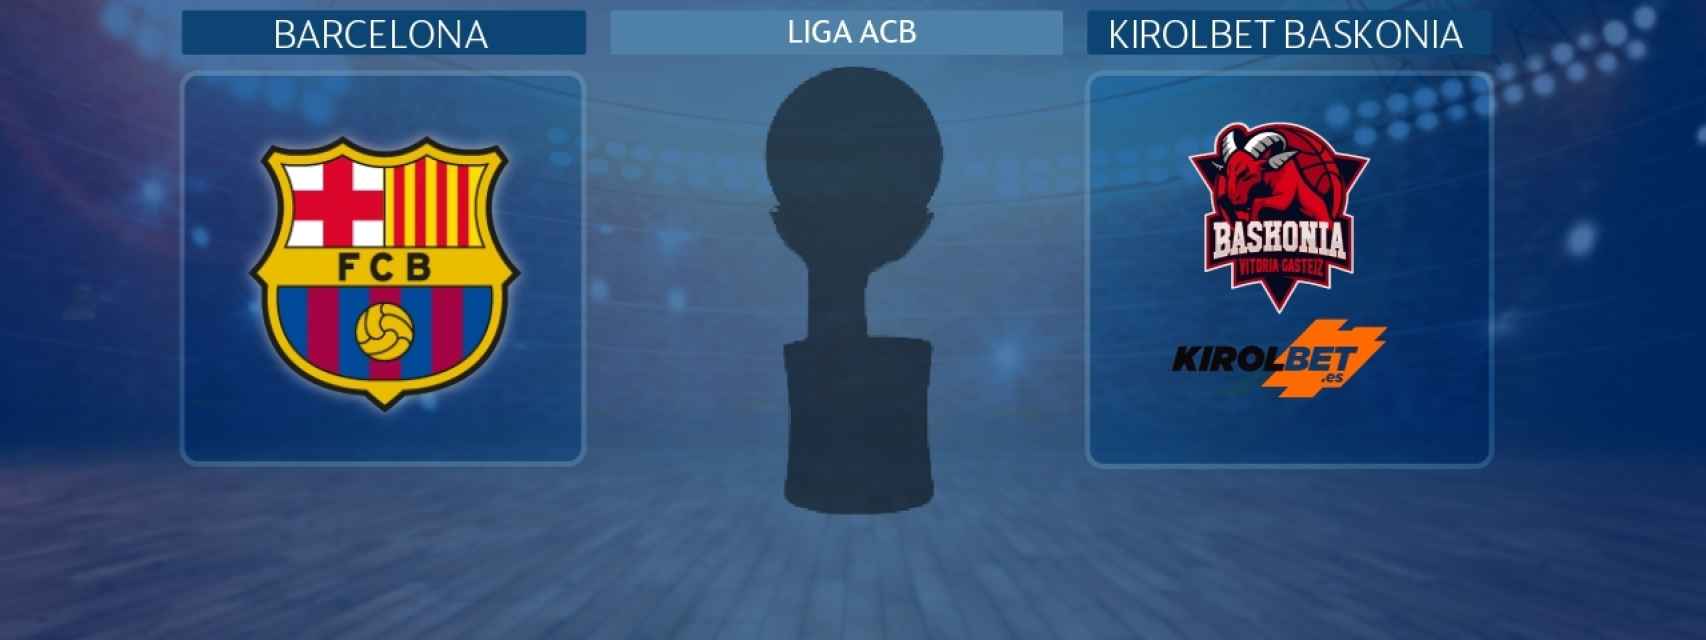 Barcelona - Kirolbet Baskonia,  final de la Liga ACB